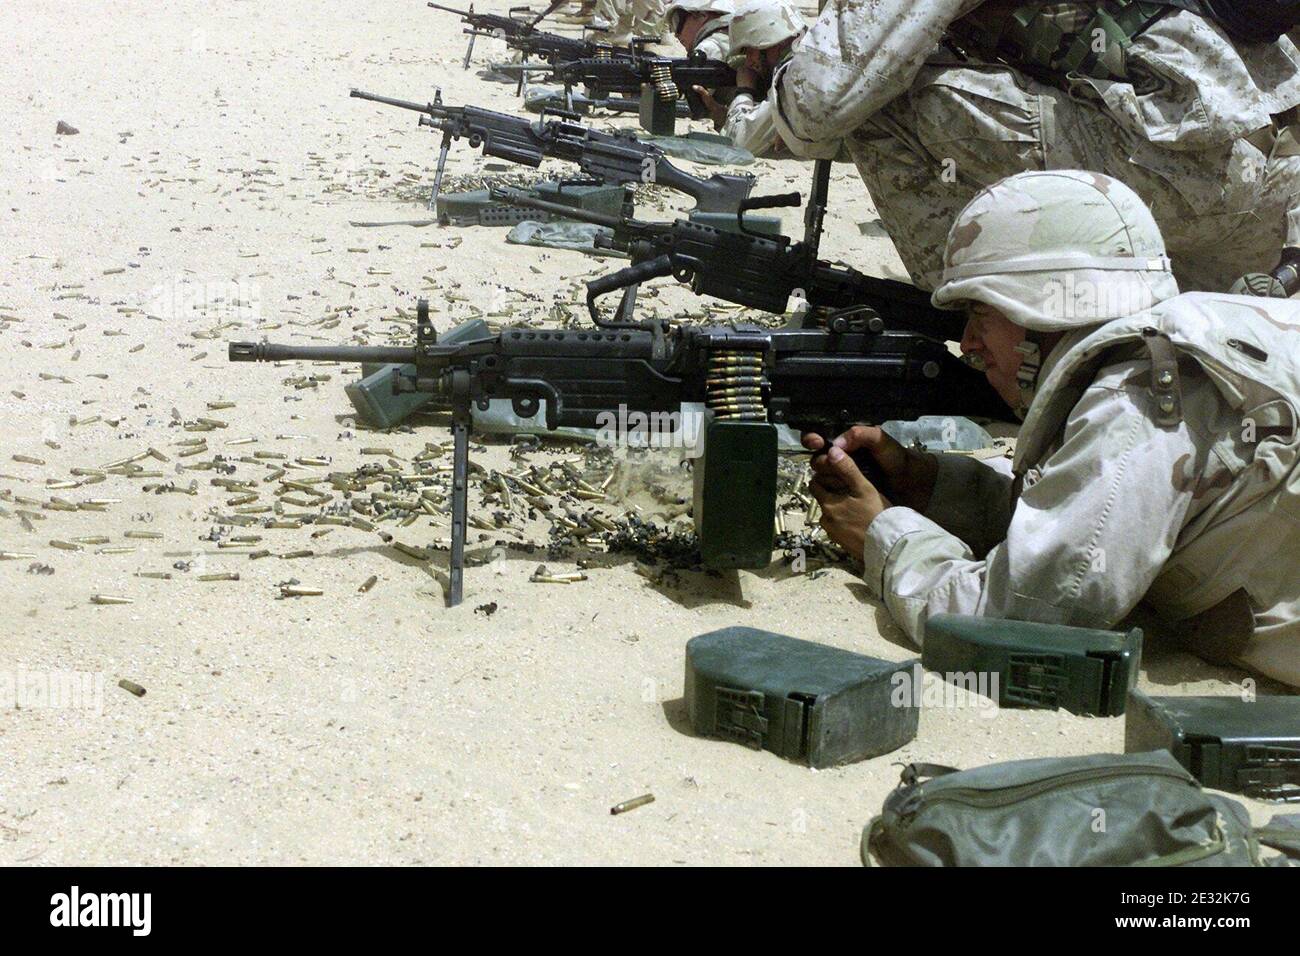 M249 FN MINIMI DM-SD-04-03556. Stock Photo